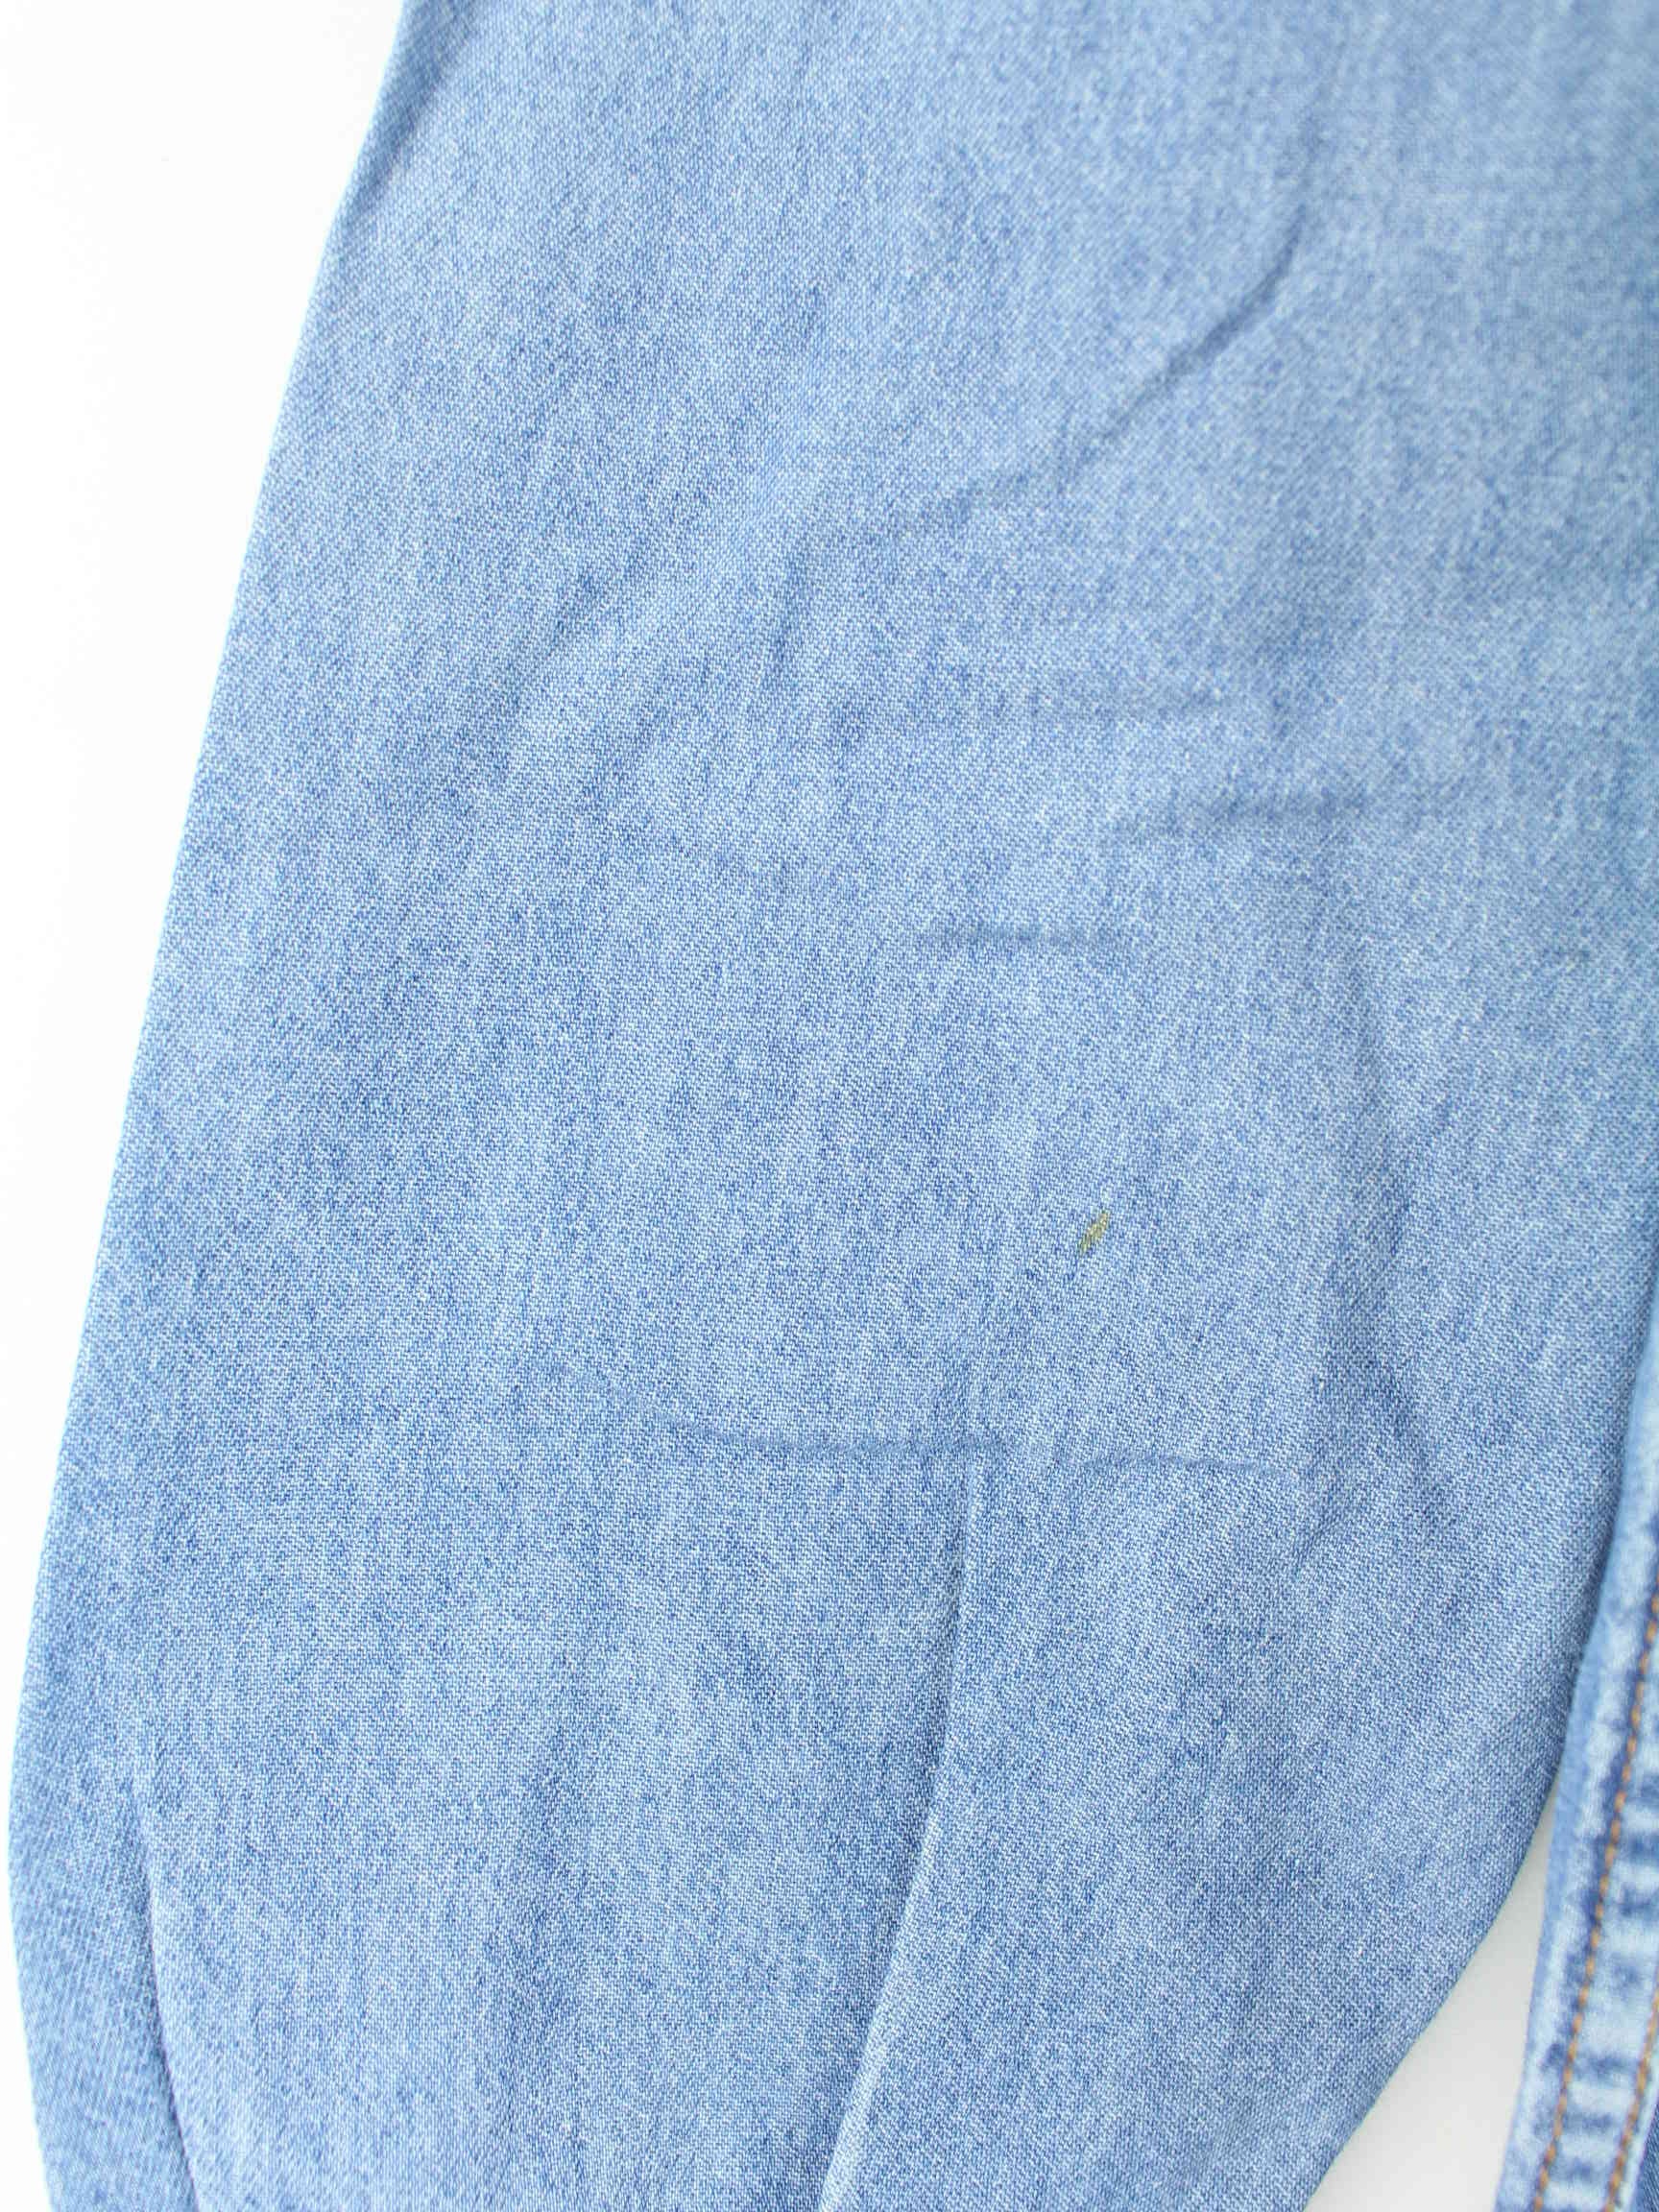 Marlboro 90s Vintage Jeans Hemd Blau XL (detail image 2)